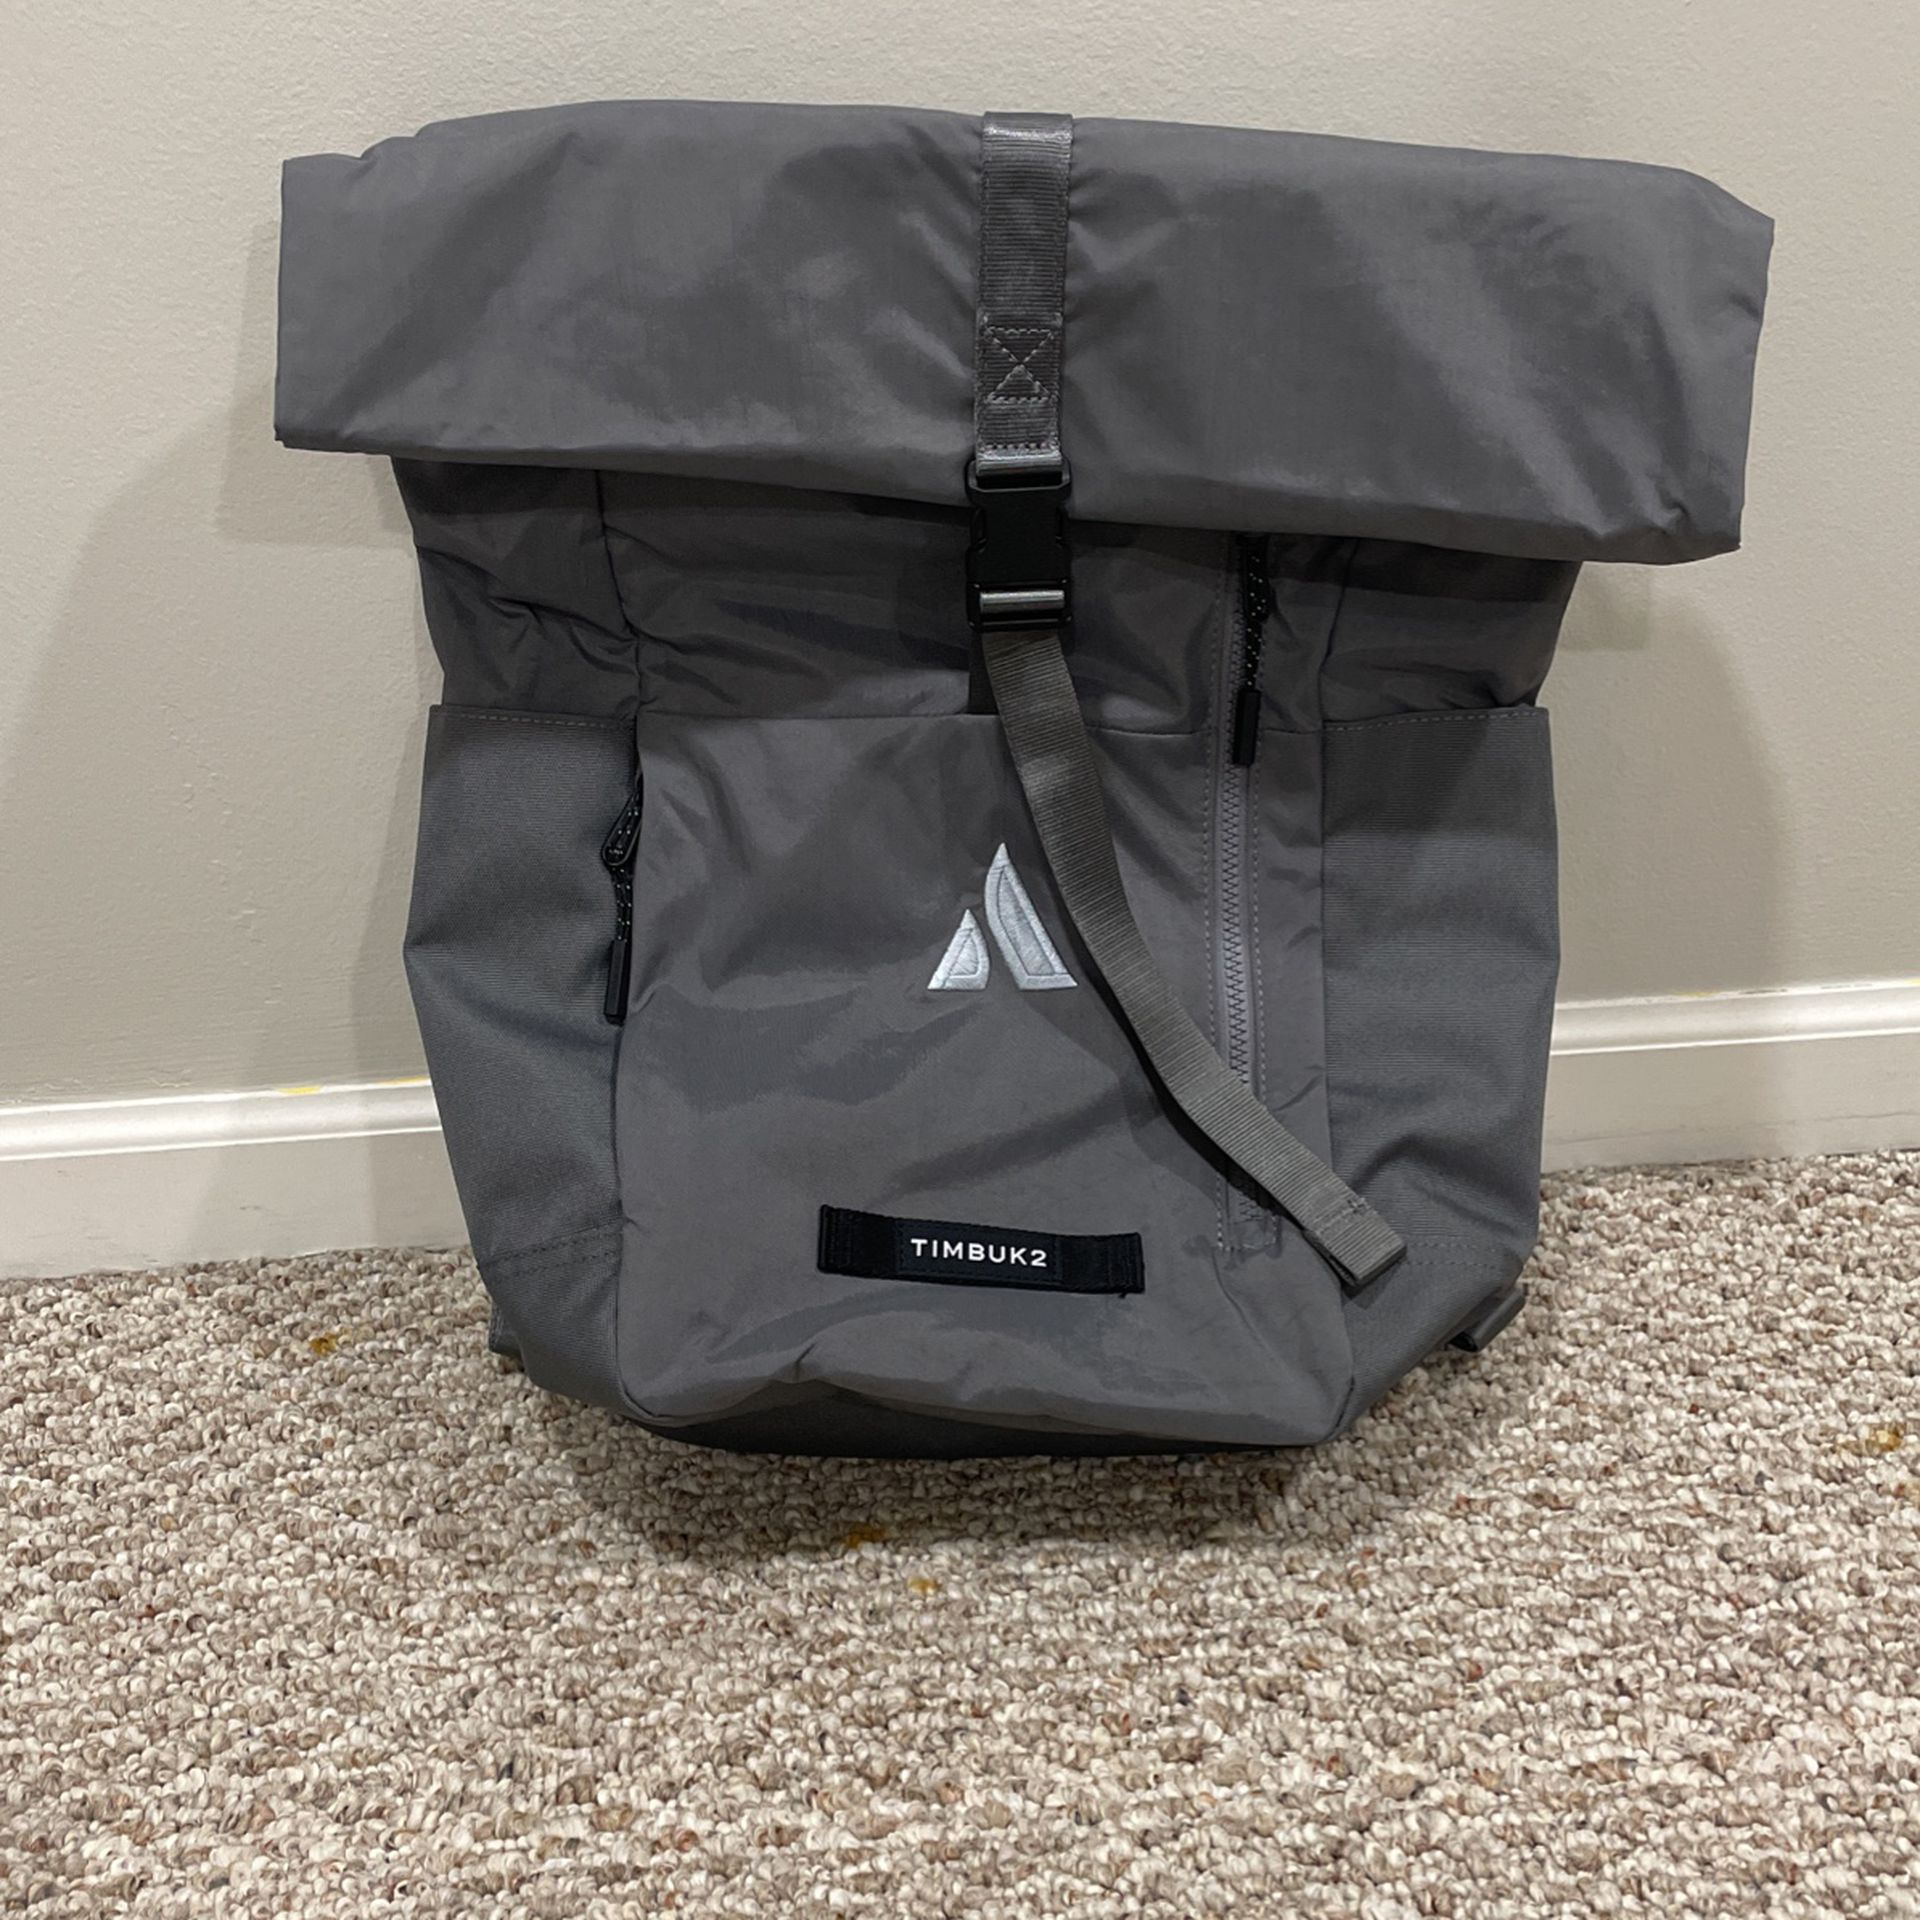 Brand New Bagpack